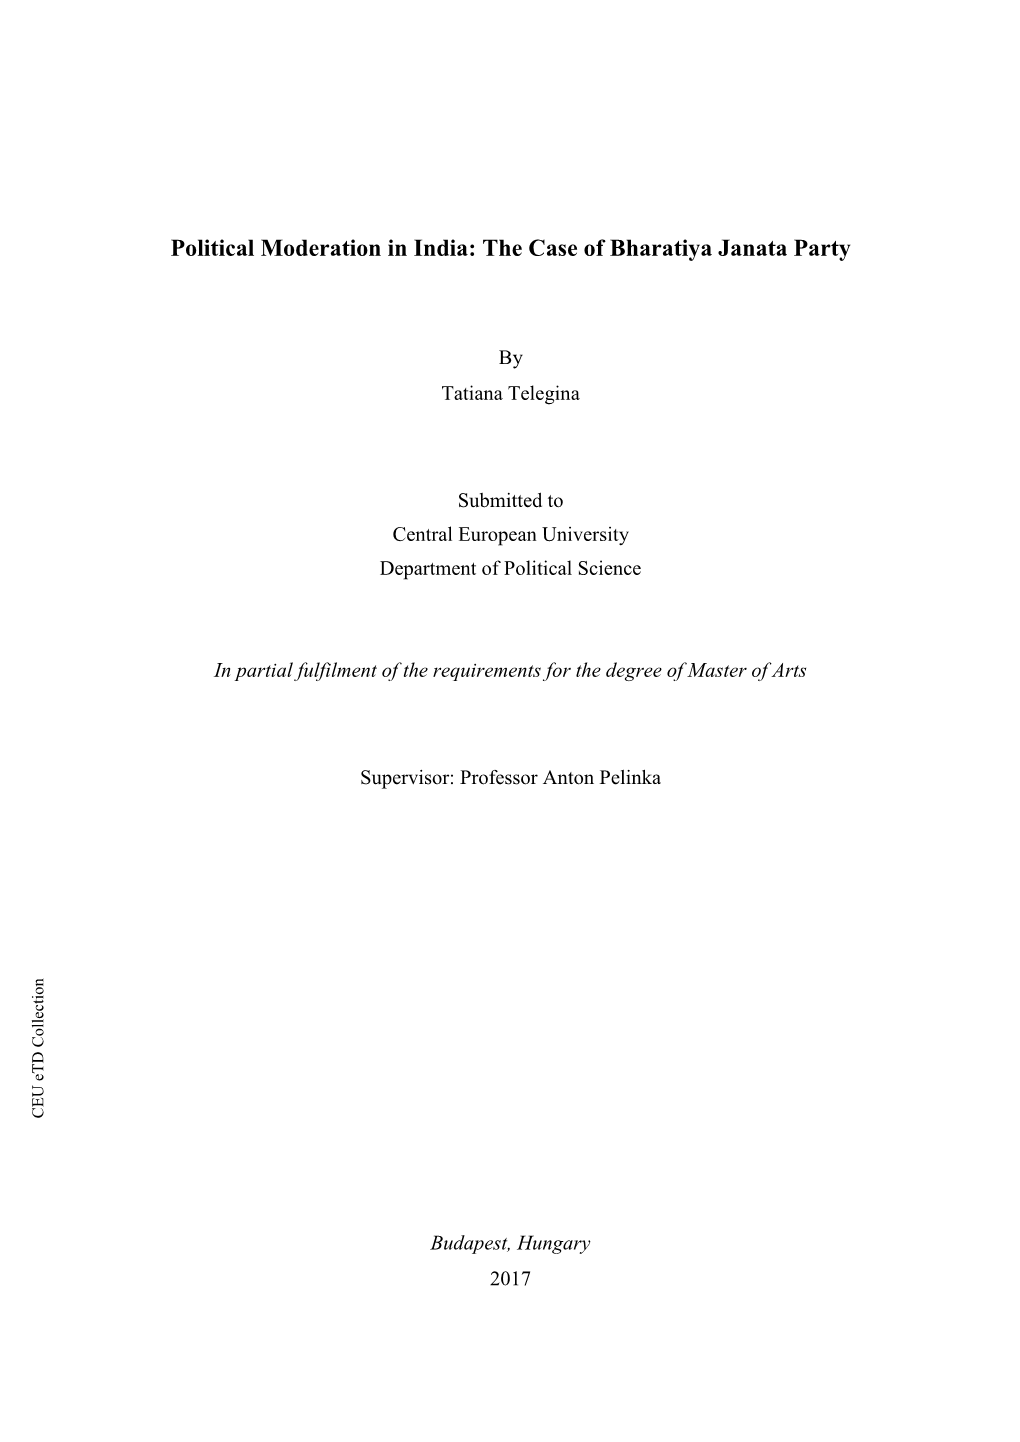 Political Moderation in India: the Case of Bharatiya Janata Party